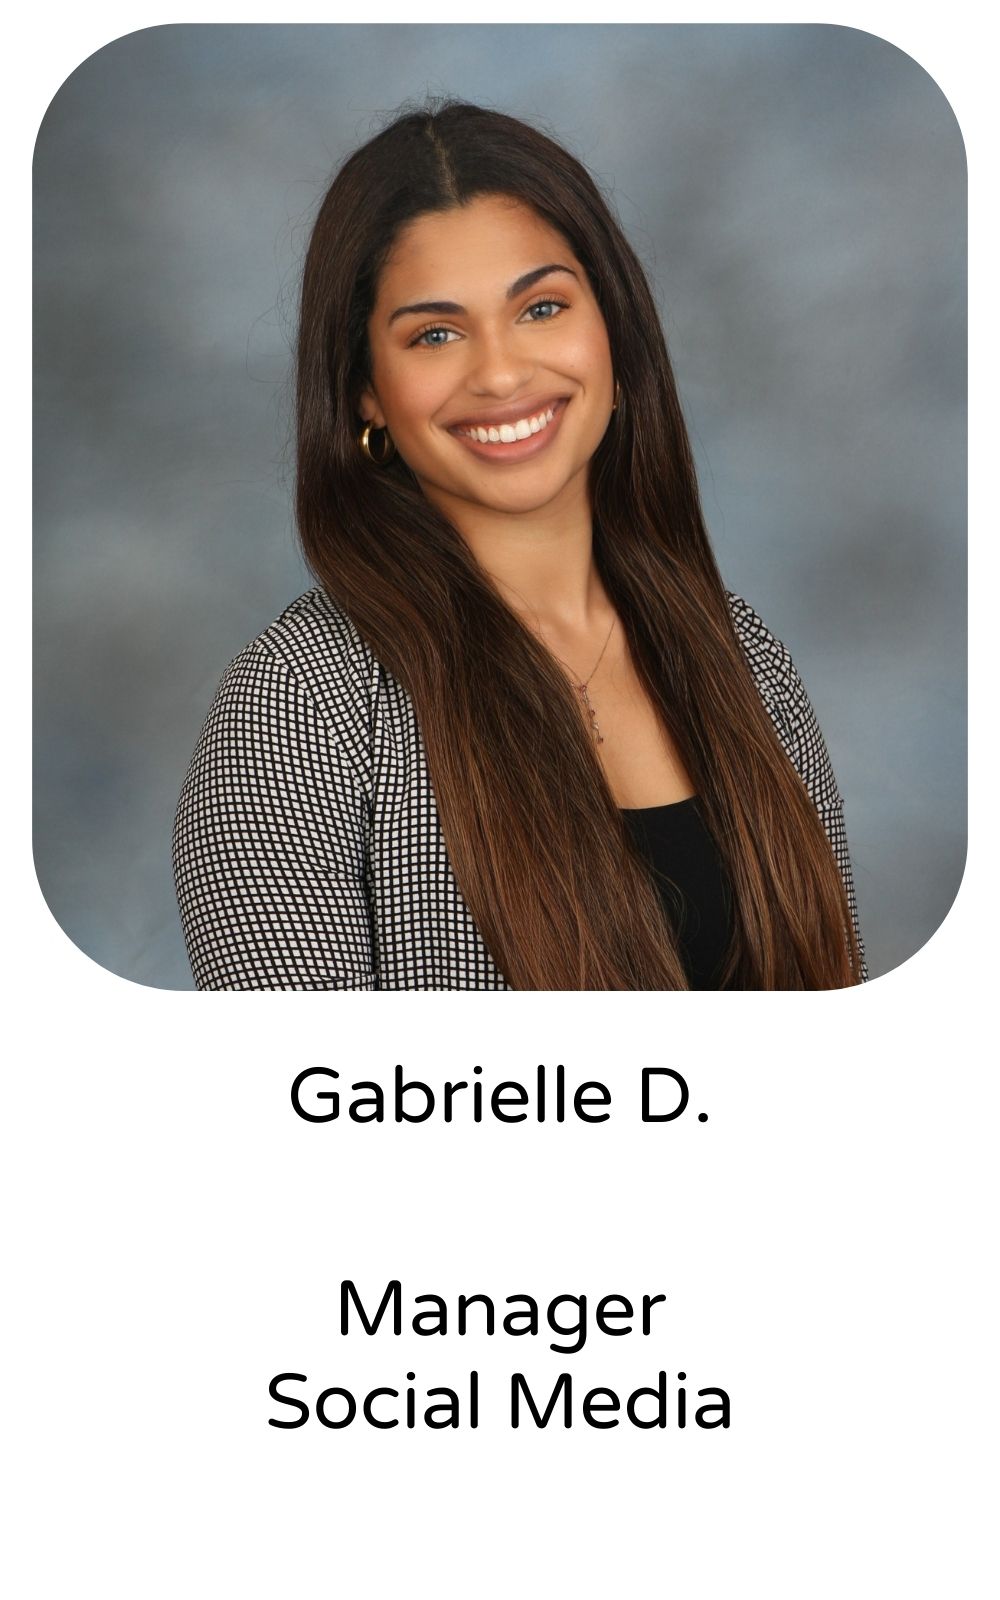 Gabrielle D, Manager, Social Media